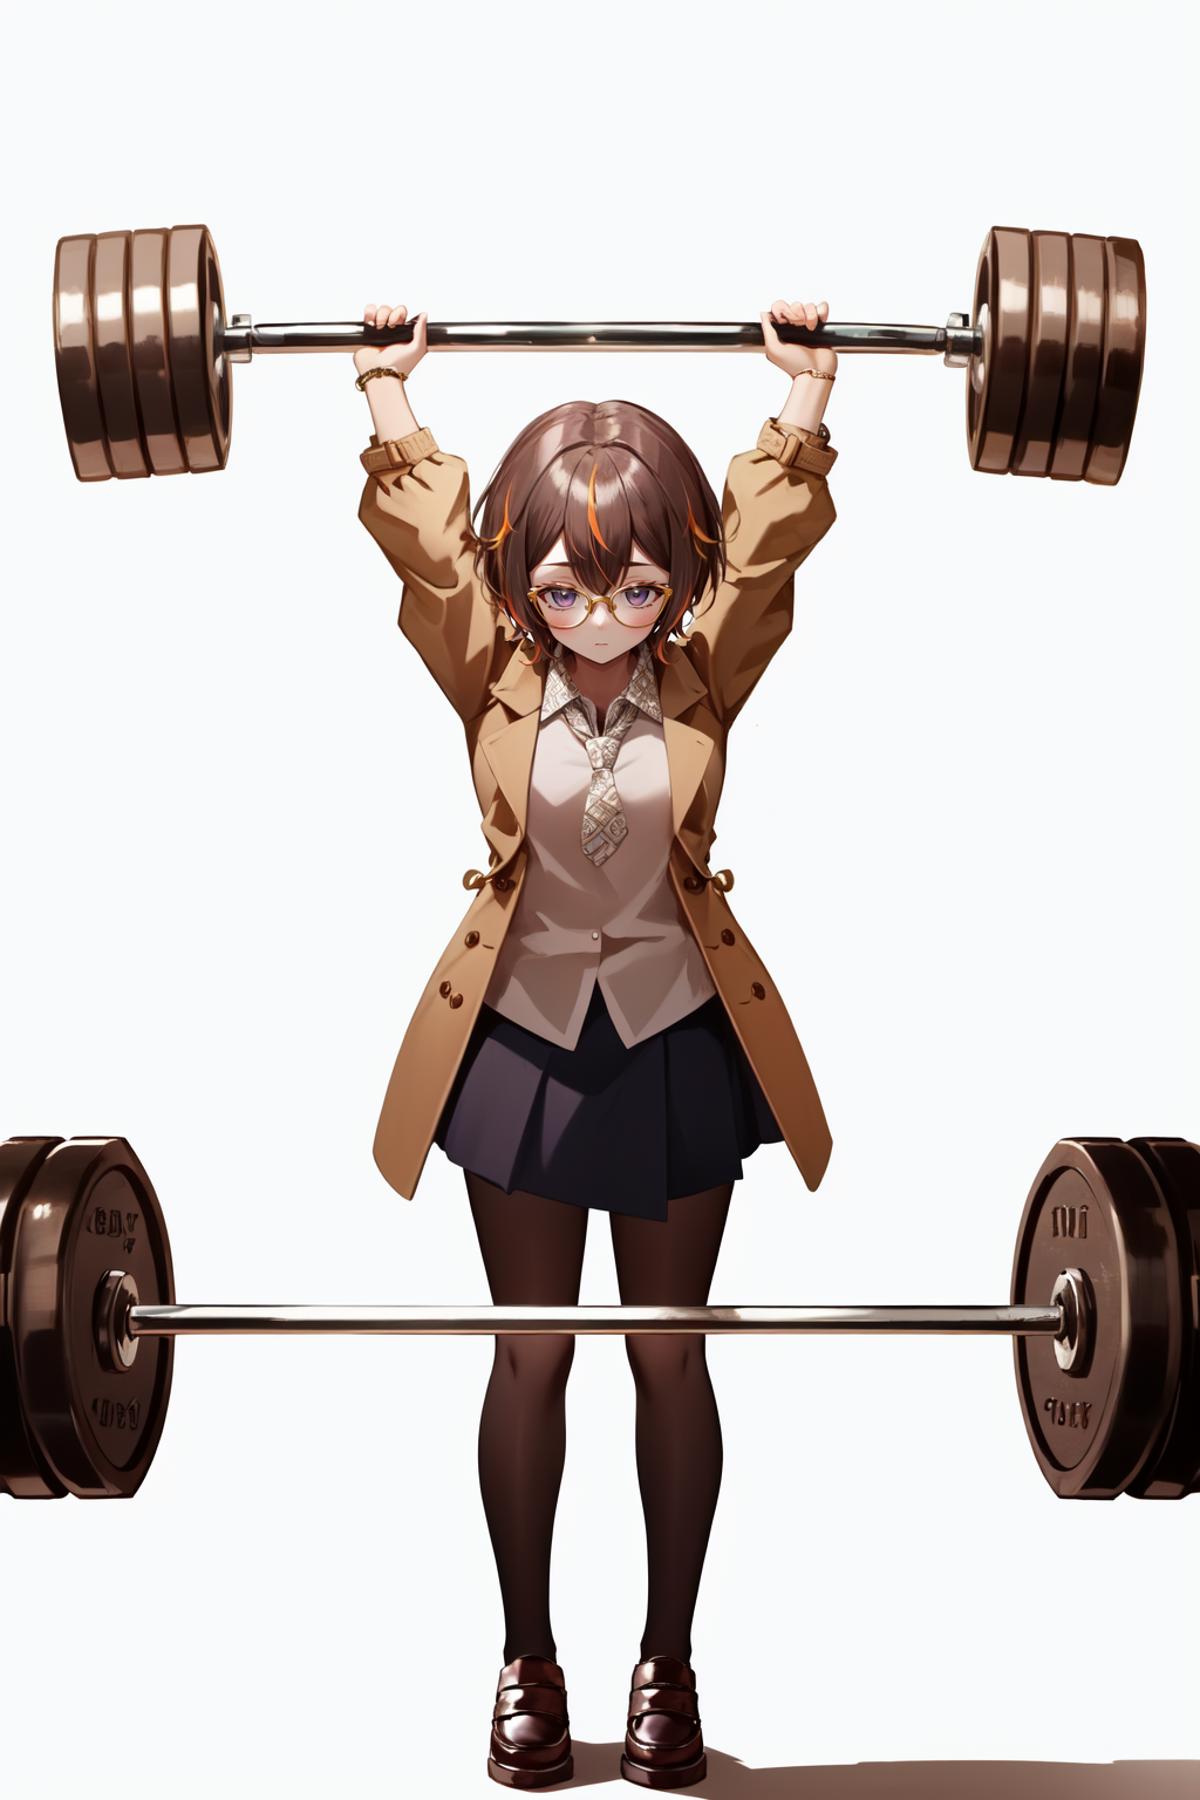 [OpenPose + Lineart] Weightlifting image by PettankoPaizuri